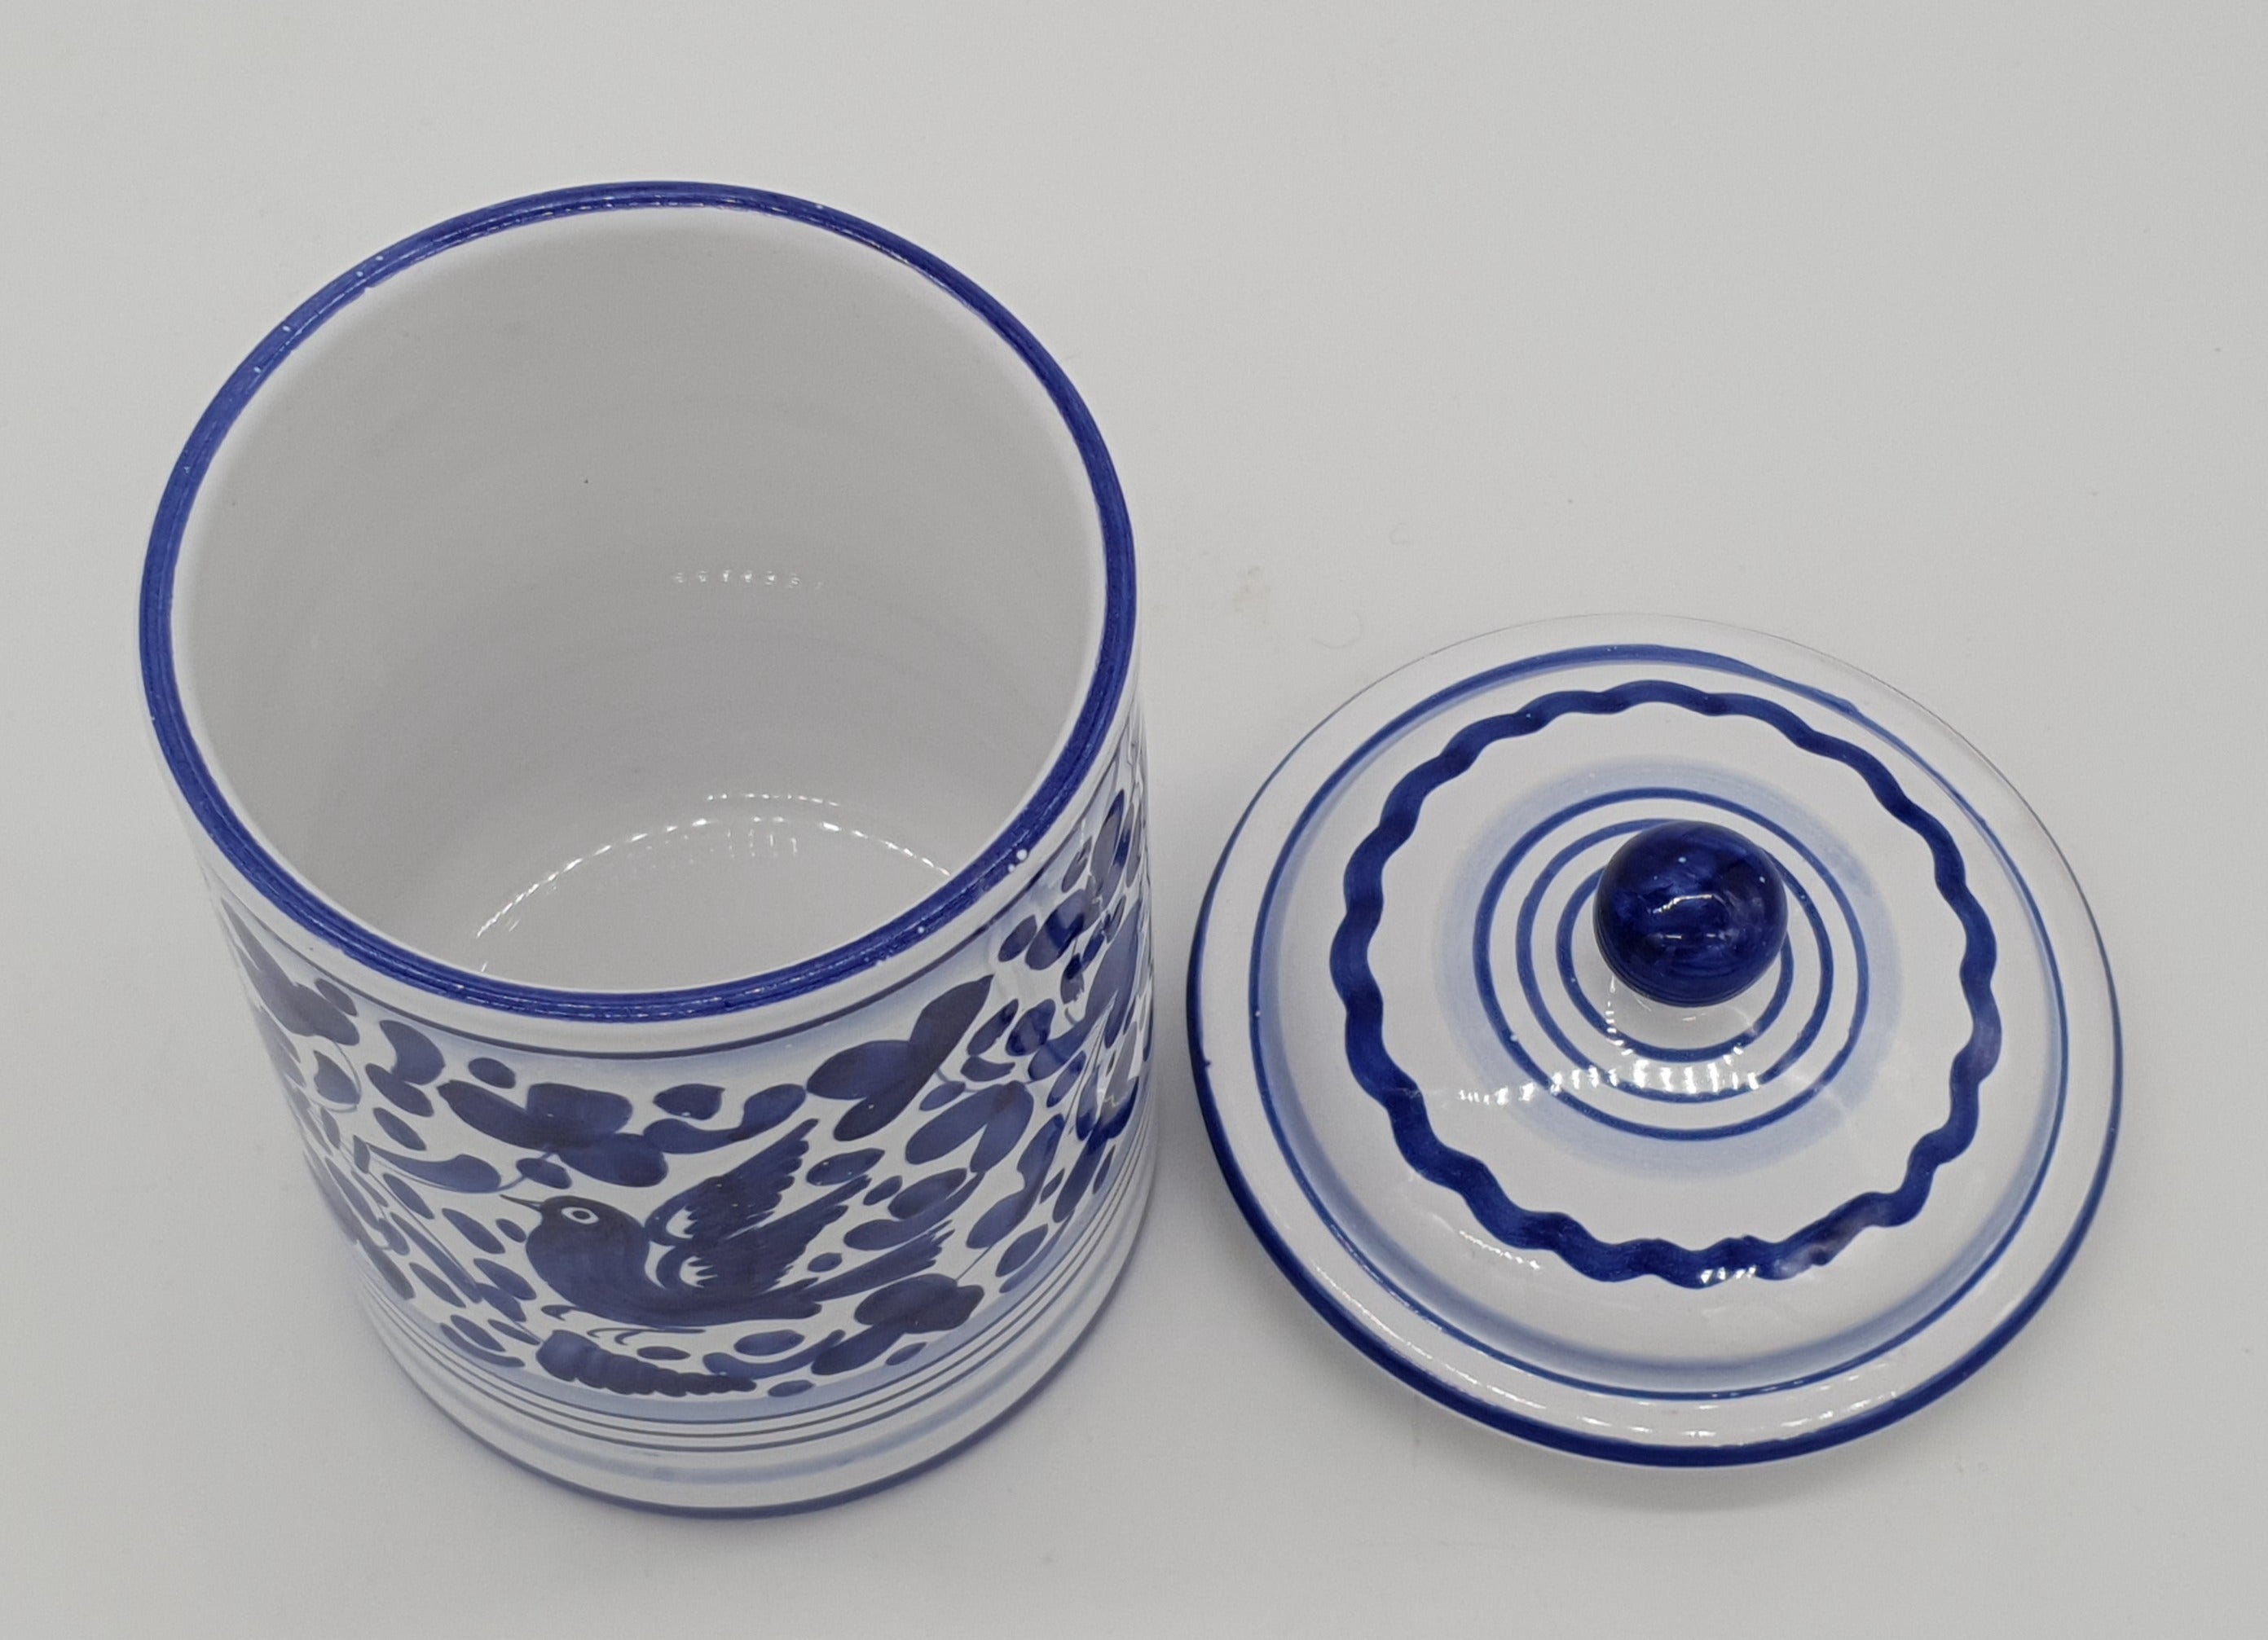 Jar with Blue Arabesque Decor